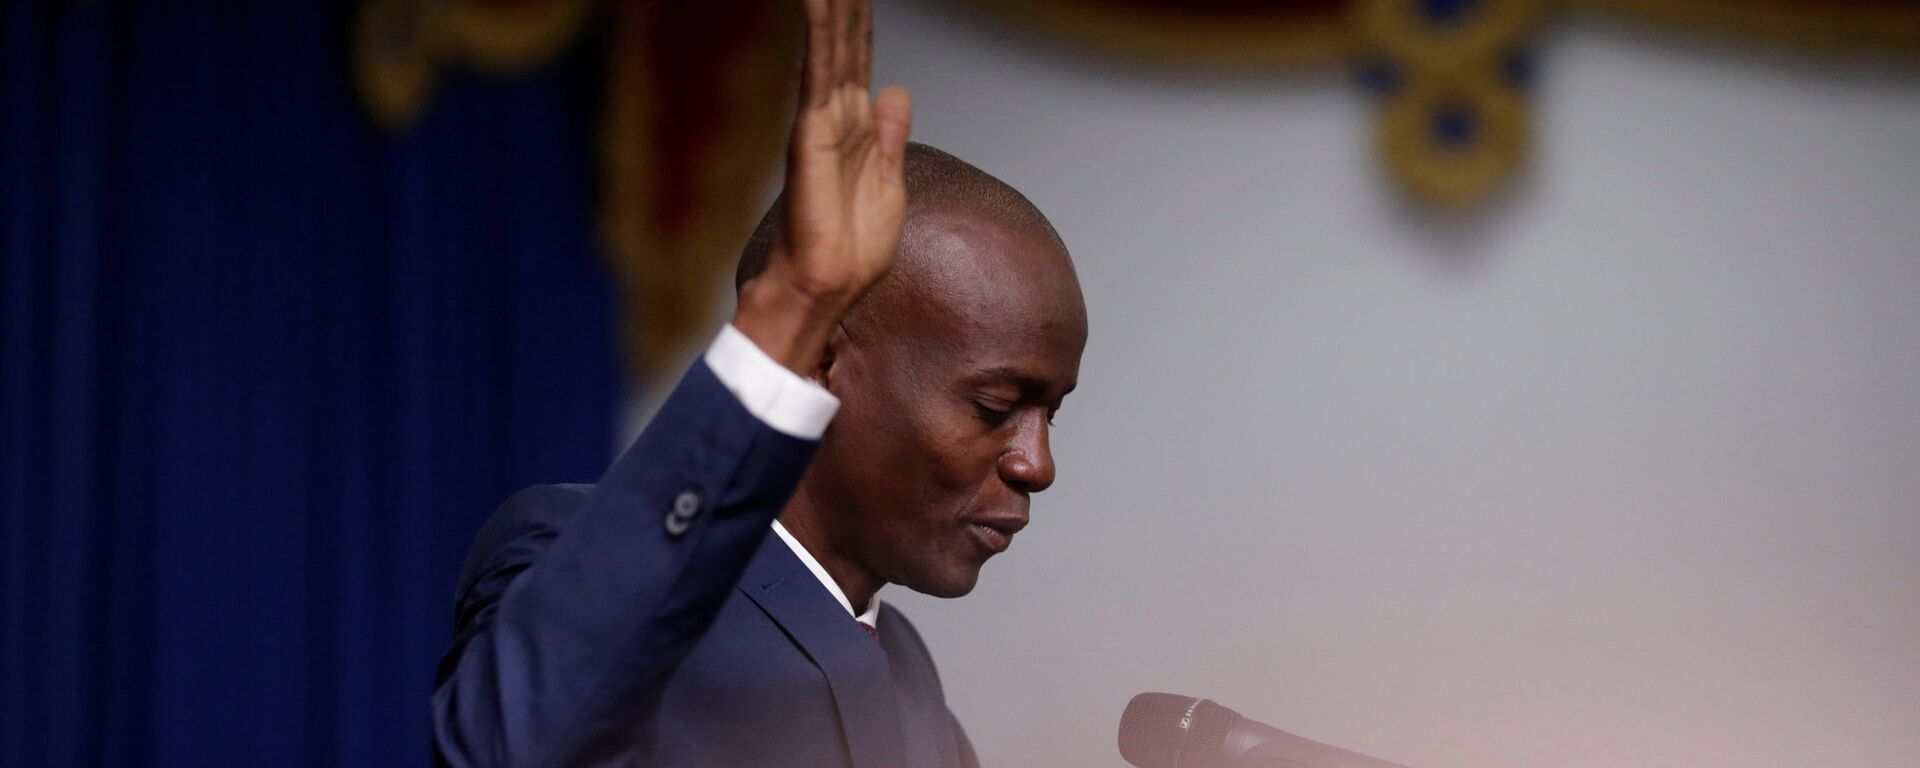 Haitian President Jovenel Moise takes the oath of office during his inauguration in Port-au-Prince, Haiti February 7, 2017 - Sputnik Mundo, 1920, 20.07.2021